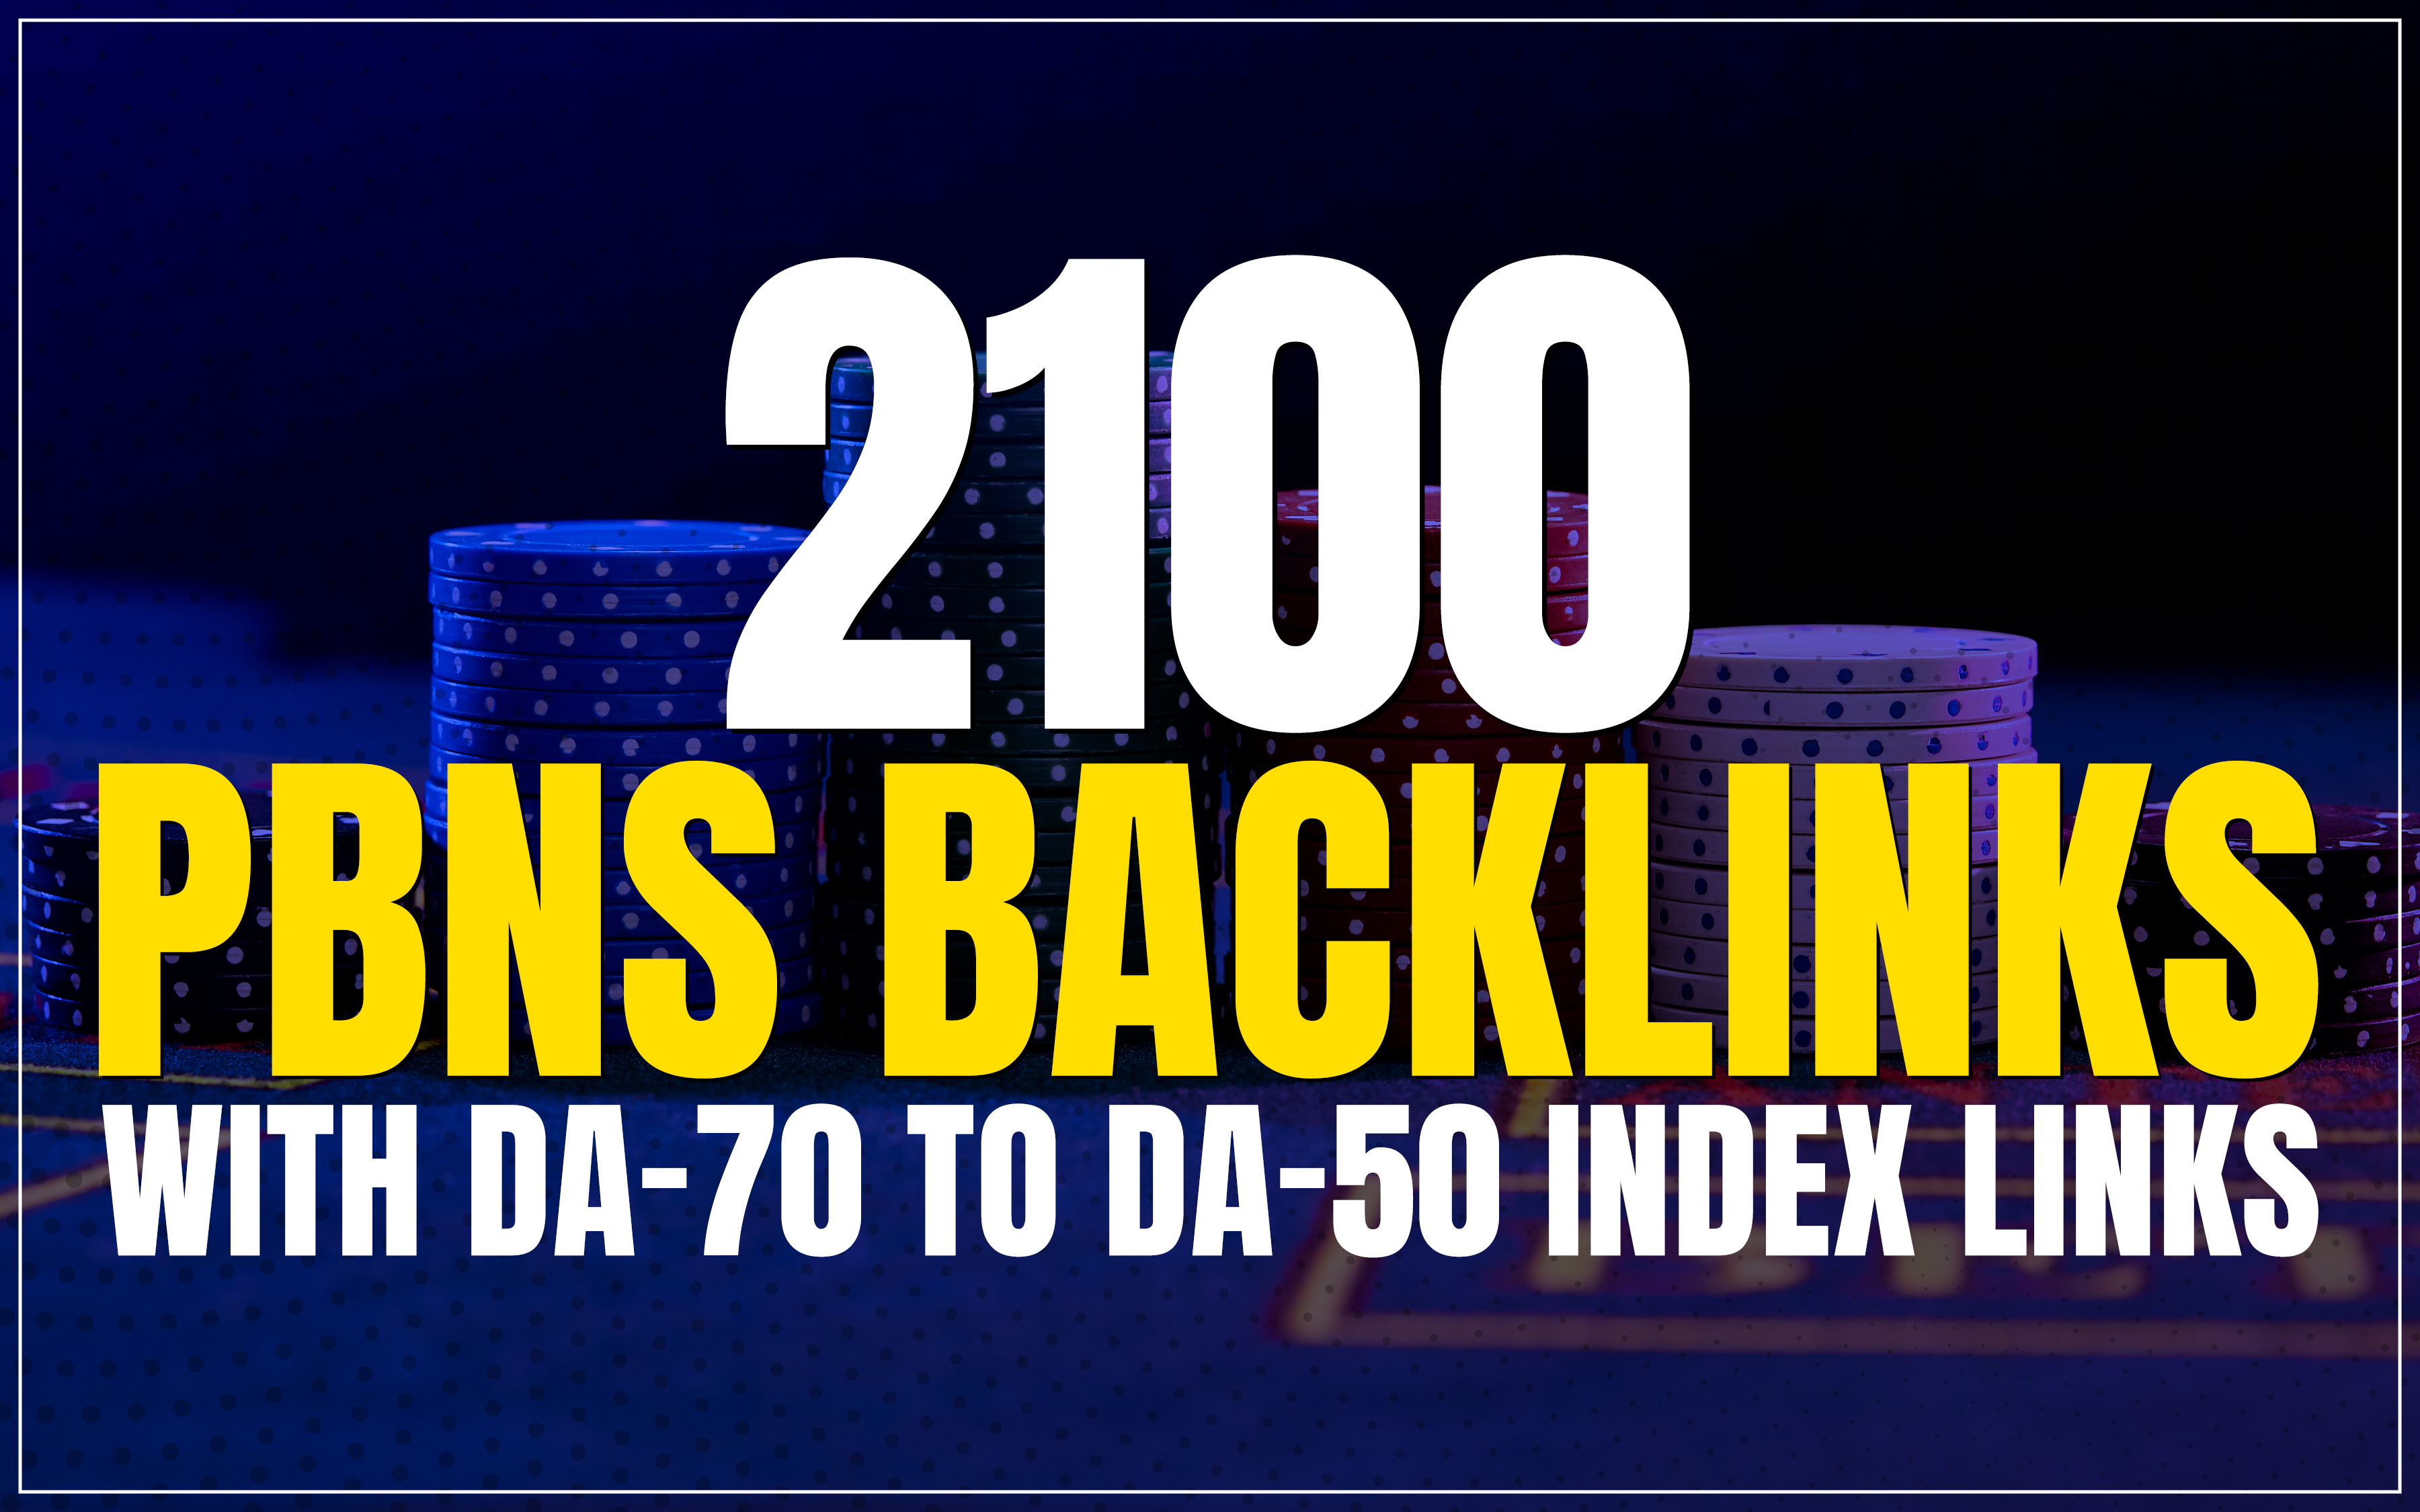 Rank 1 - 2100 PBN's Casino, Slot,Gambling, Poker Website Backlinks WITH DA-70 TO DA-50 Plus